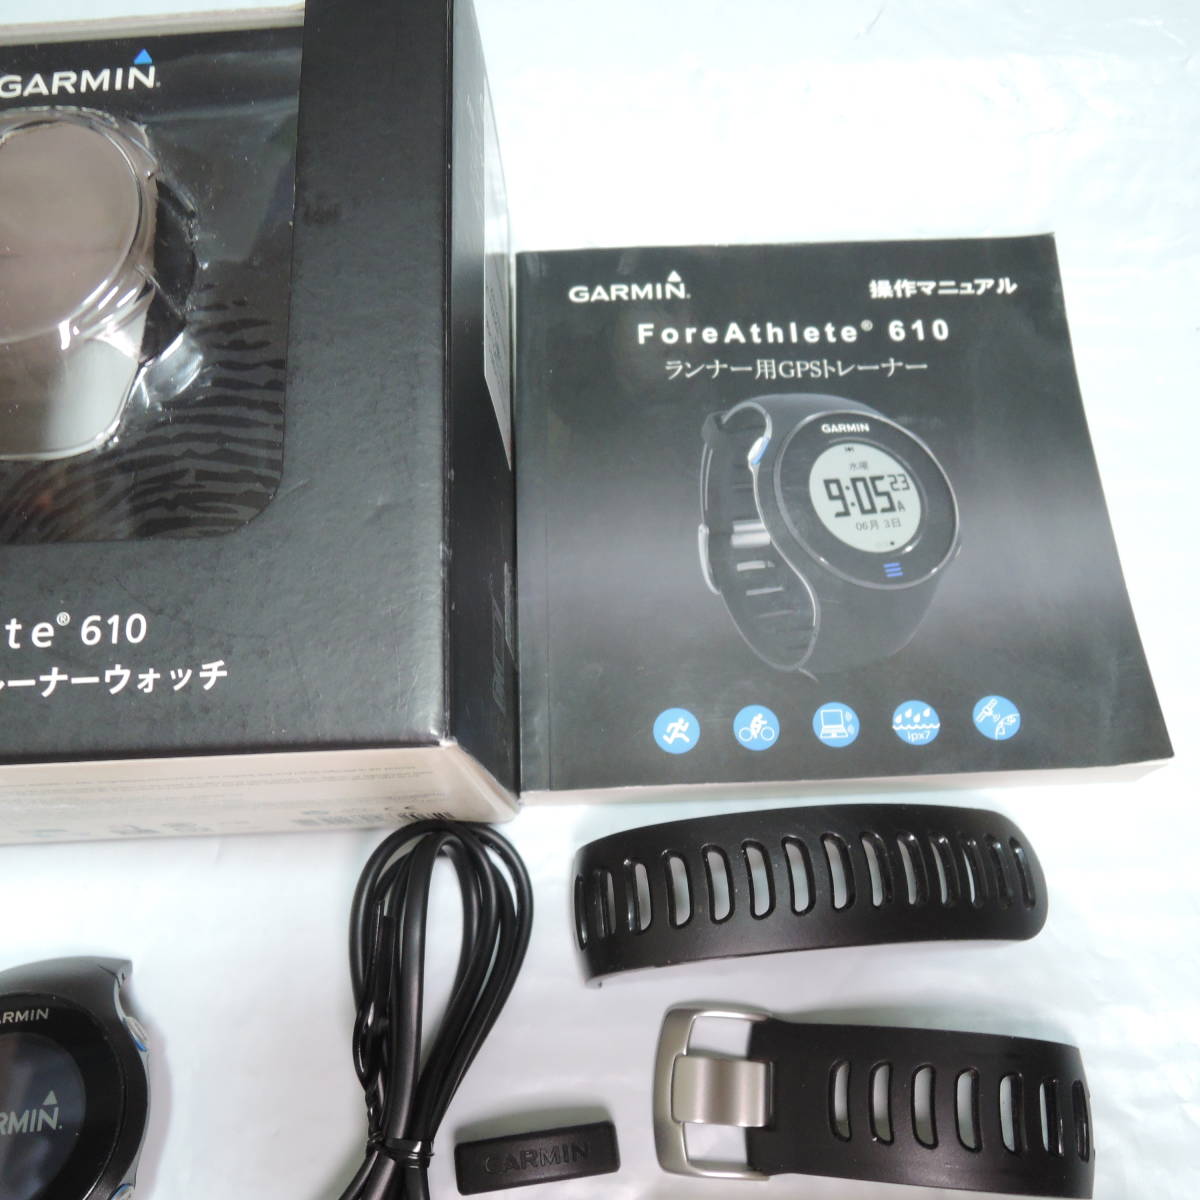 GARMIN ForeAthlete 610 running watch GPS Garmin junk 